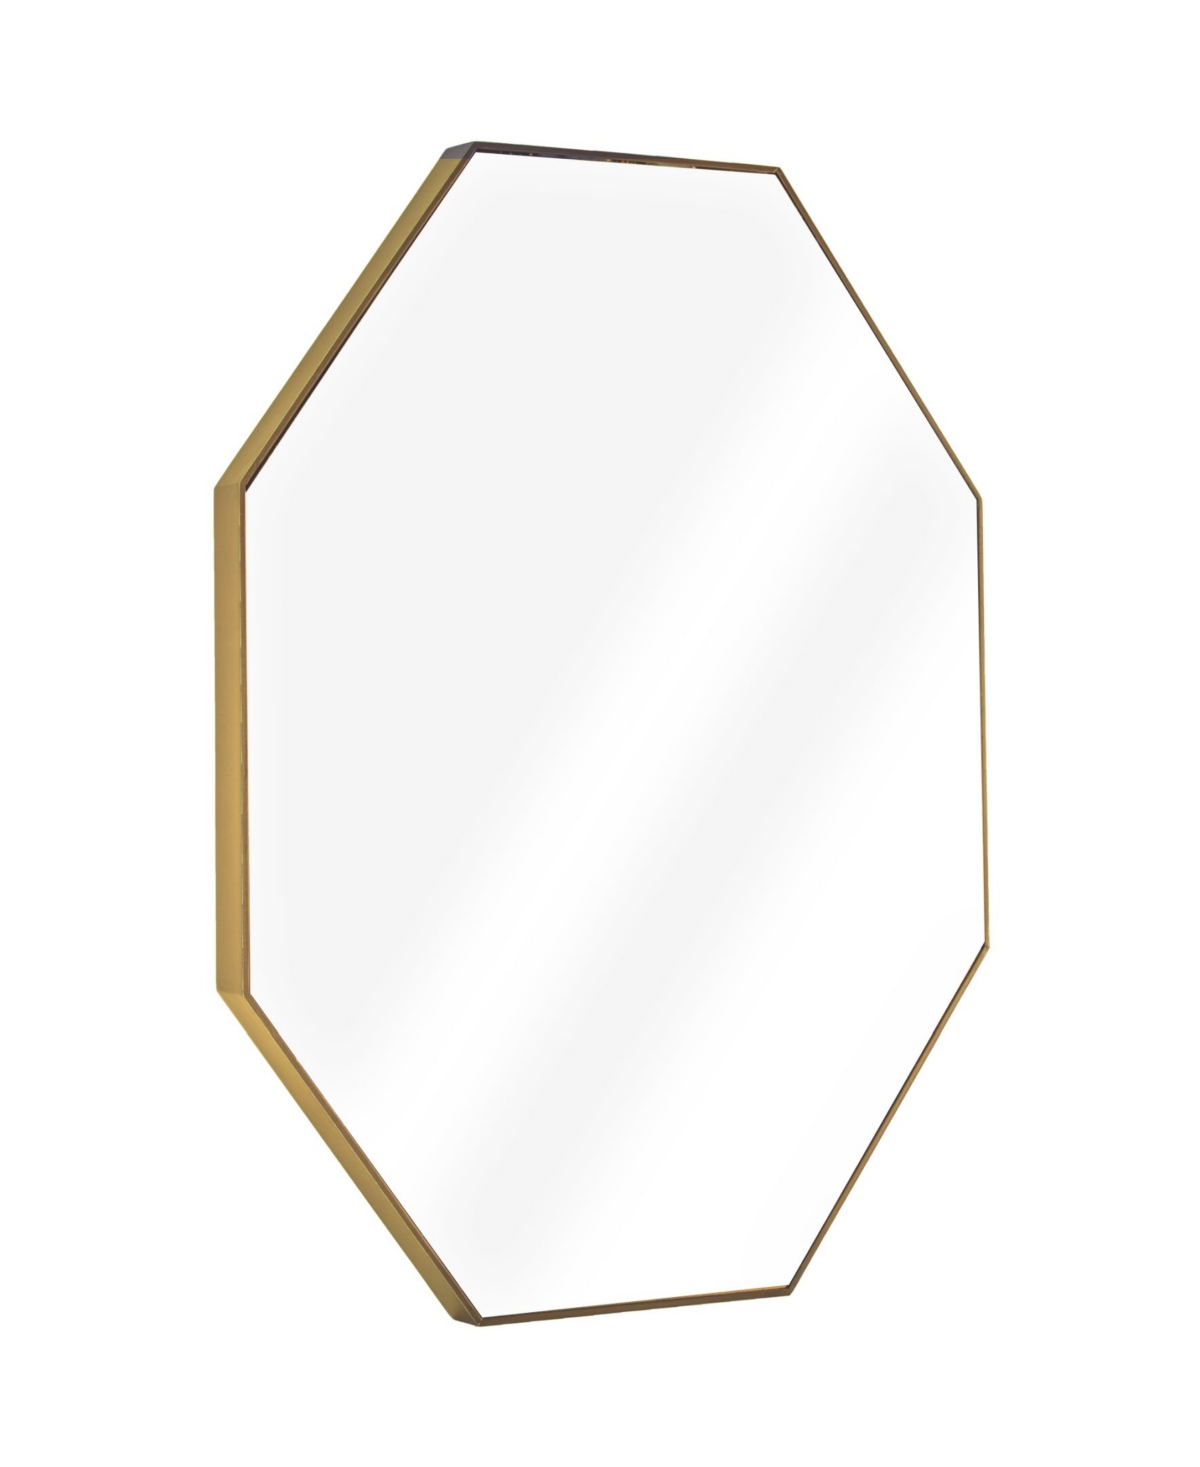 American Art Decor Octagon Wall Vanity Infinity Mirror - Gold